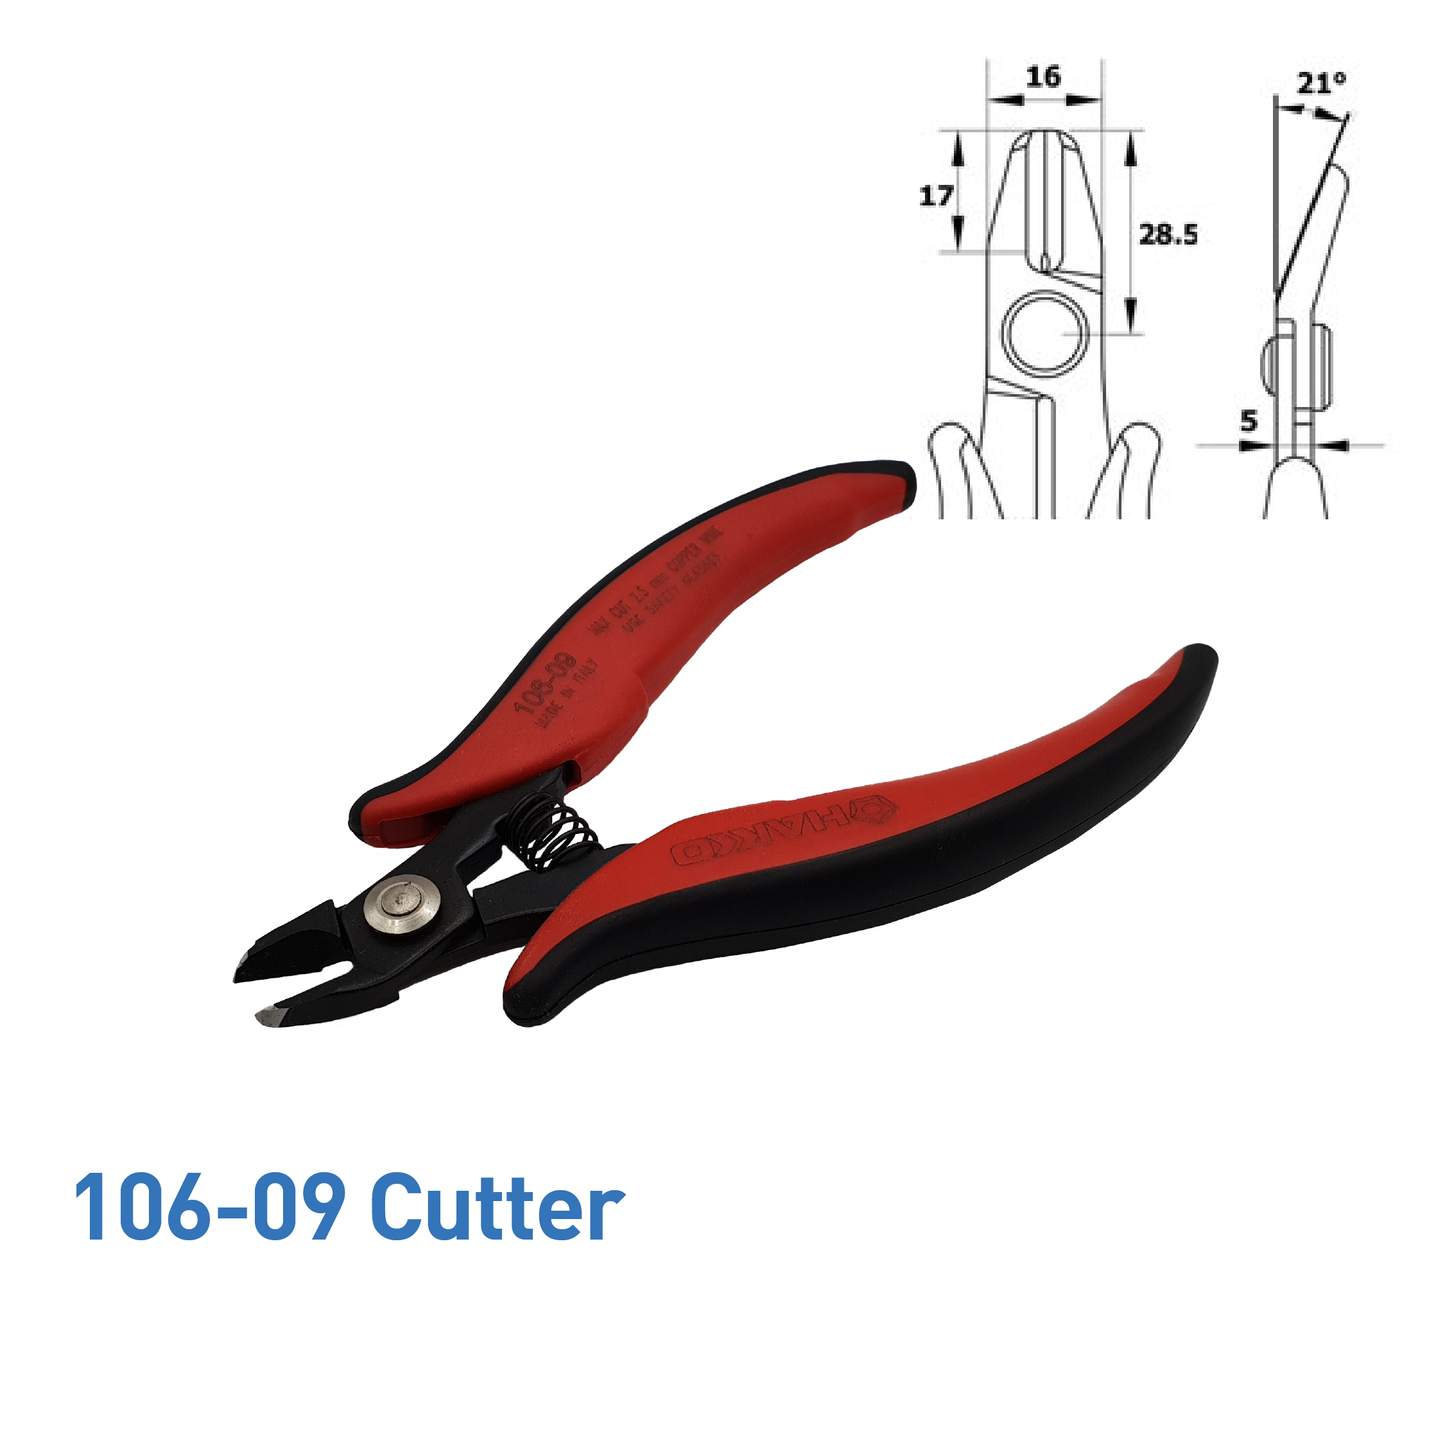 Hakko_ 106-09 Cutting Tool_ Cutters, Pliers, Multi-Tools_ Hakko Products